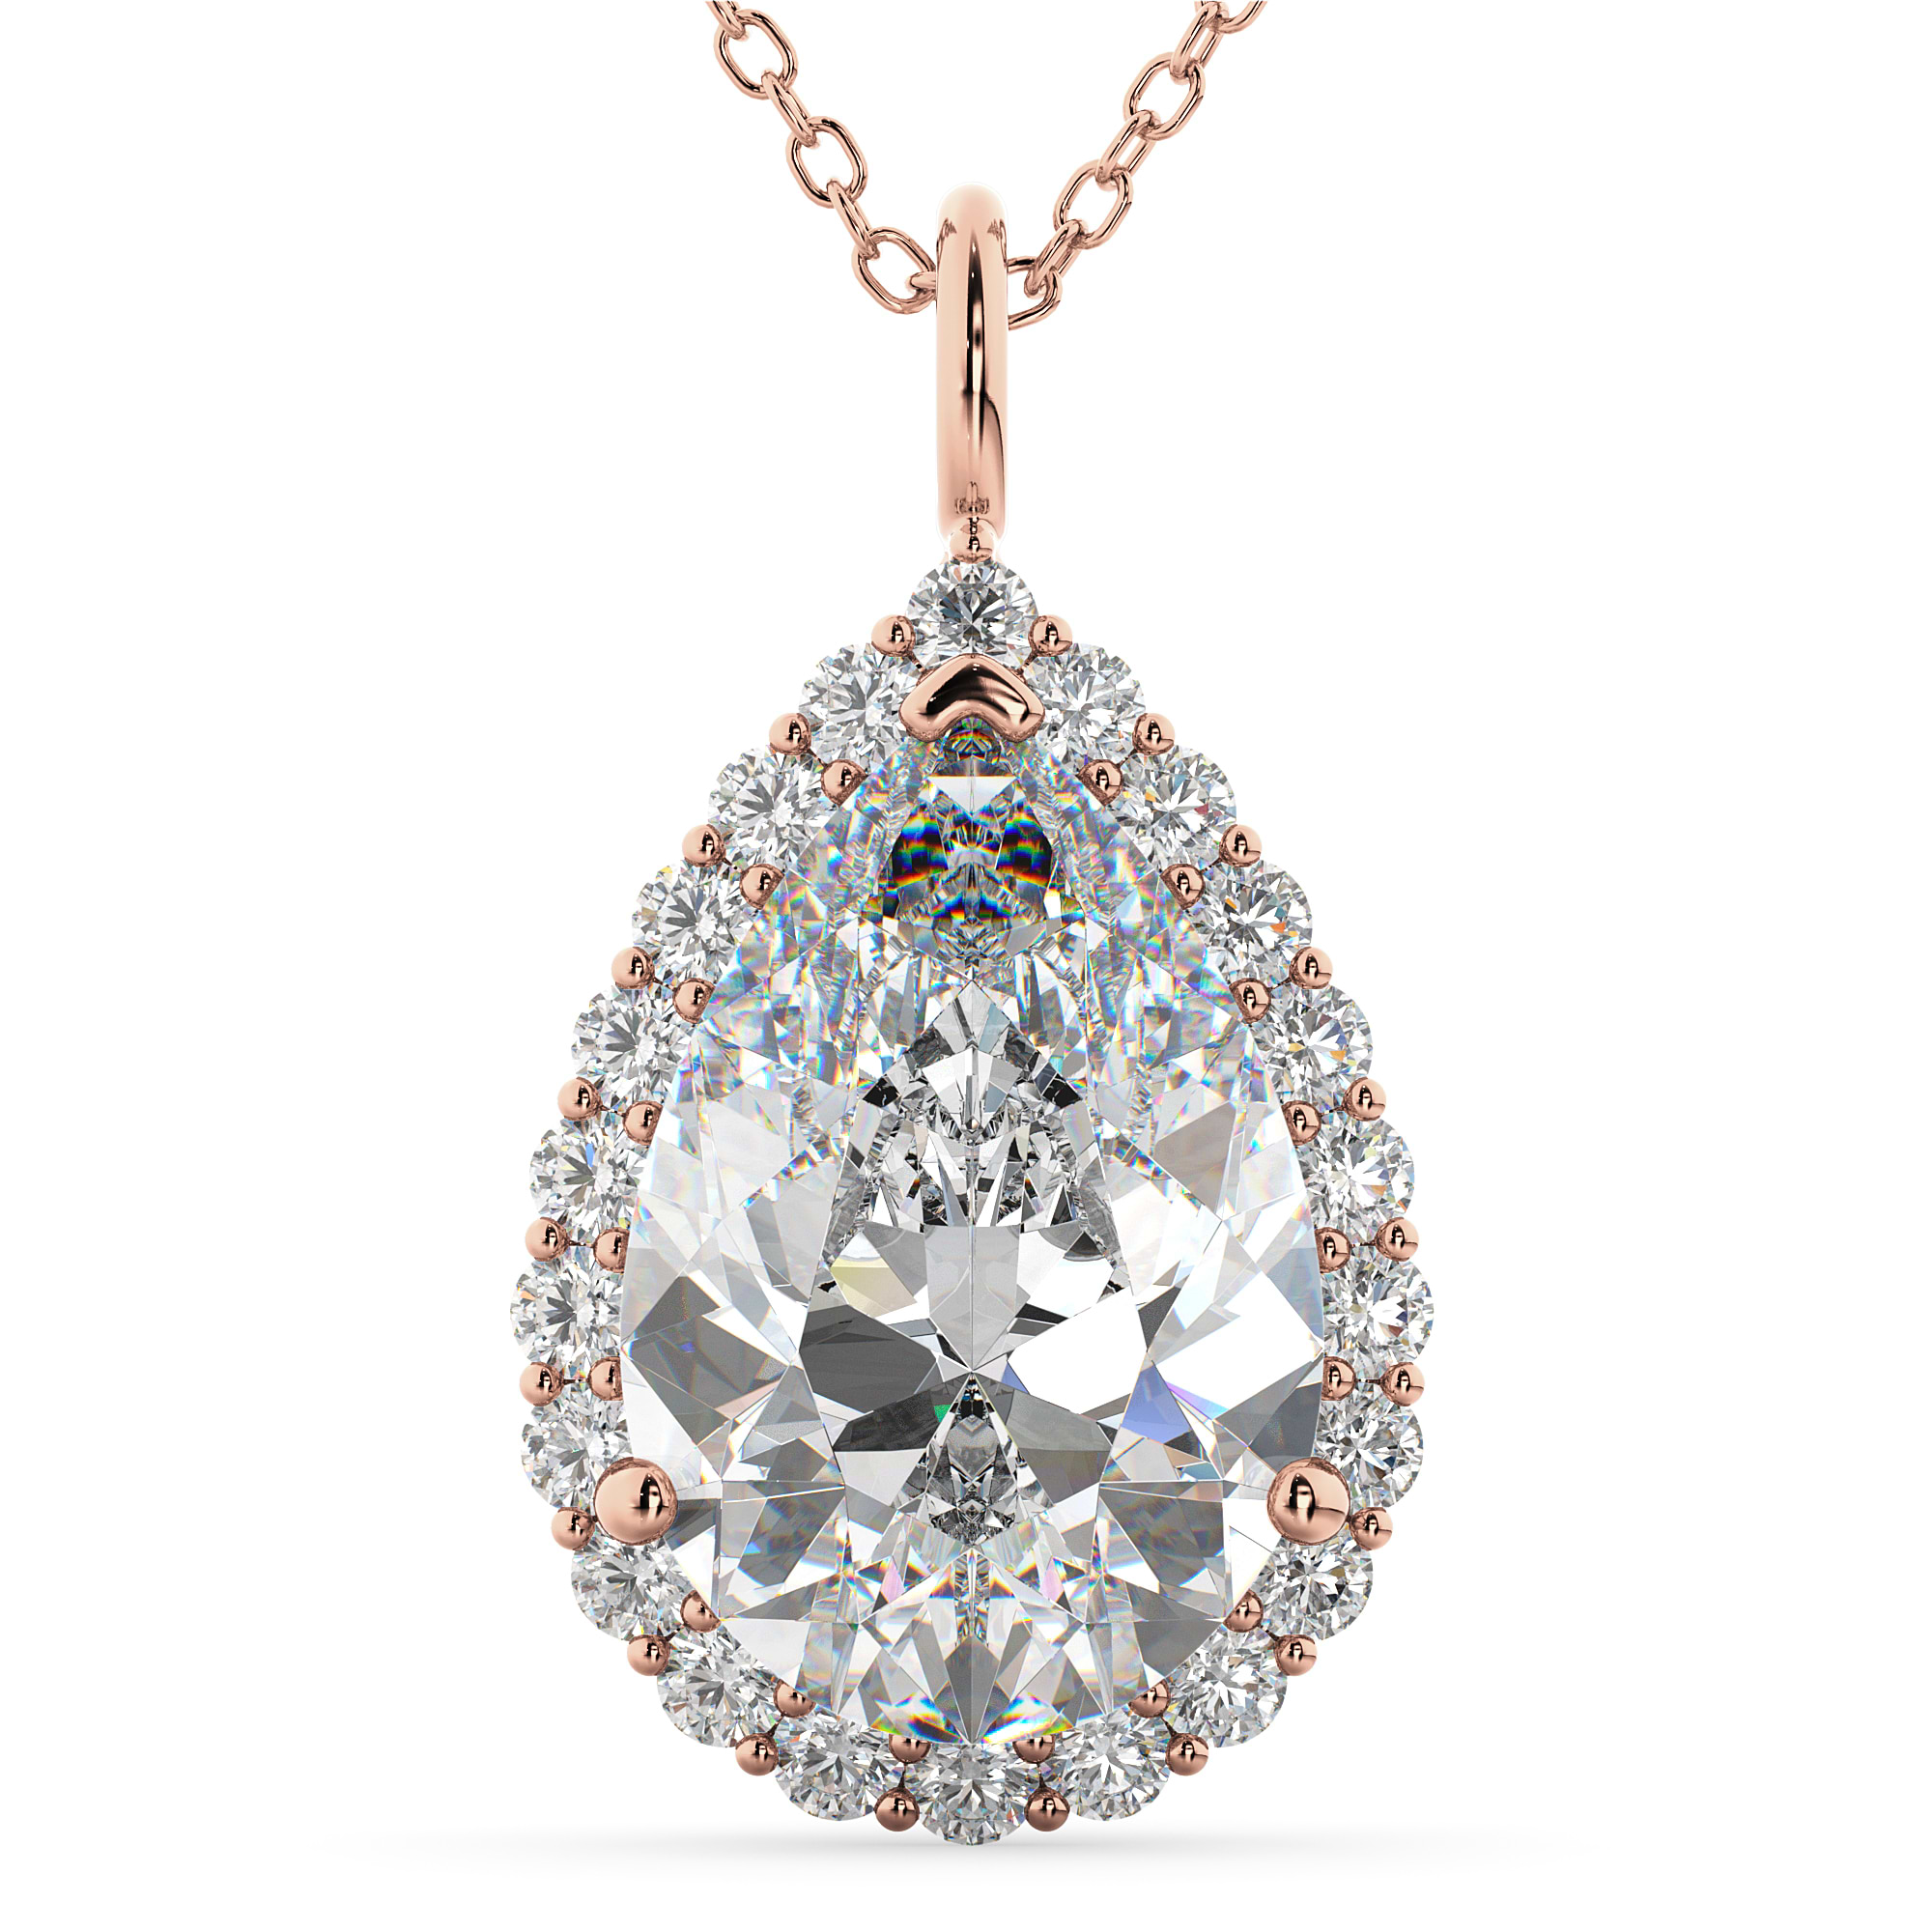 Halo Pear Shaped Diamond Pendant Necklace 14k Rose Gold (4.69ct)